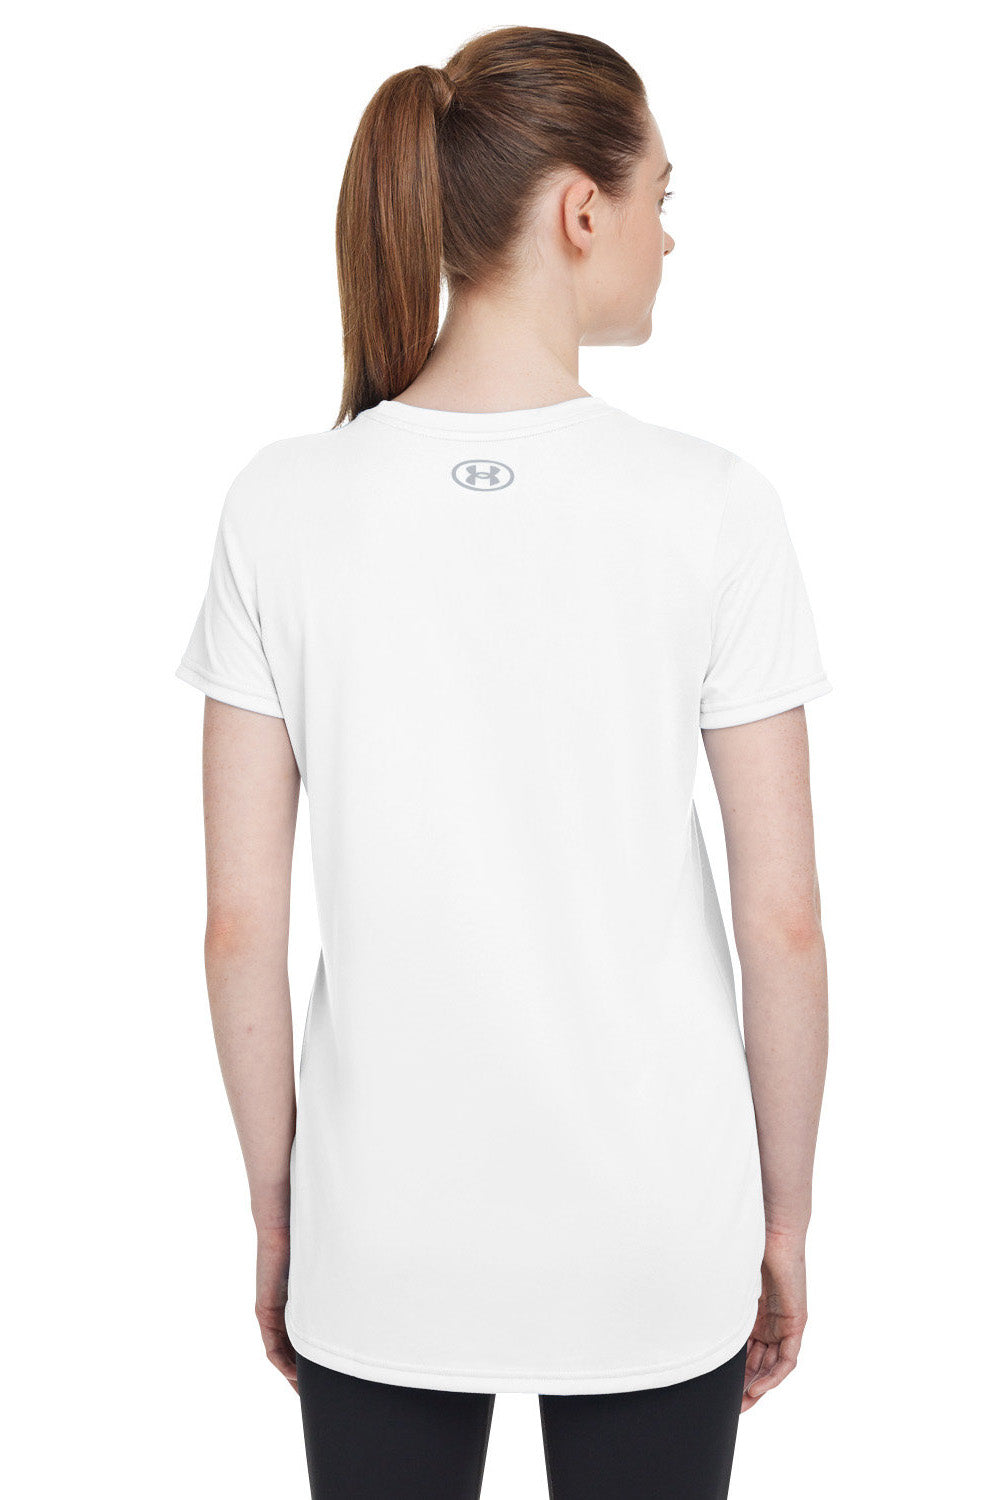 Under Armour 1376847 Womens Team Tech Moisture Wicking Short Sleeve Crewneck T-Shirt White Model Back